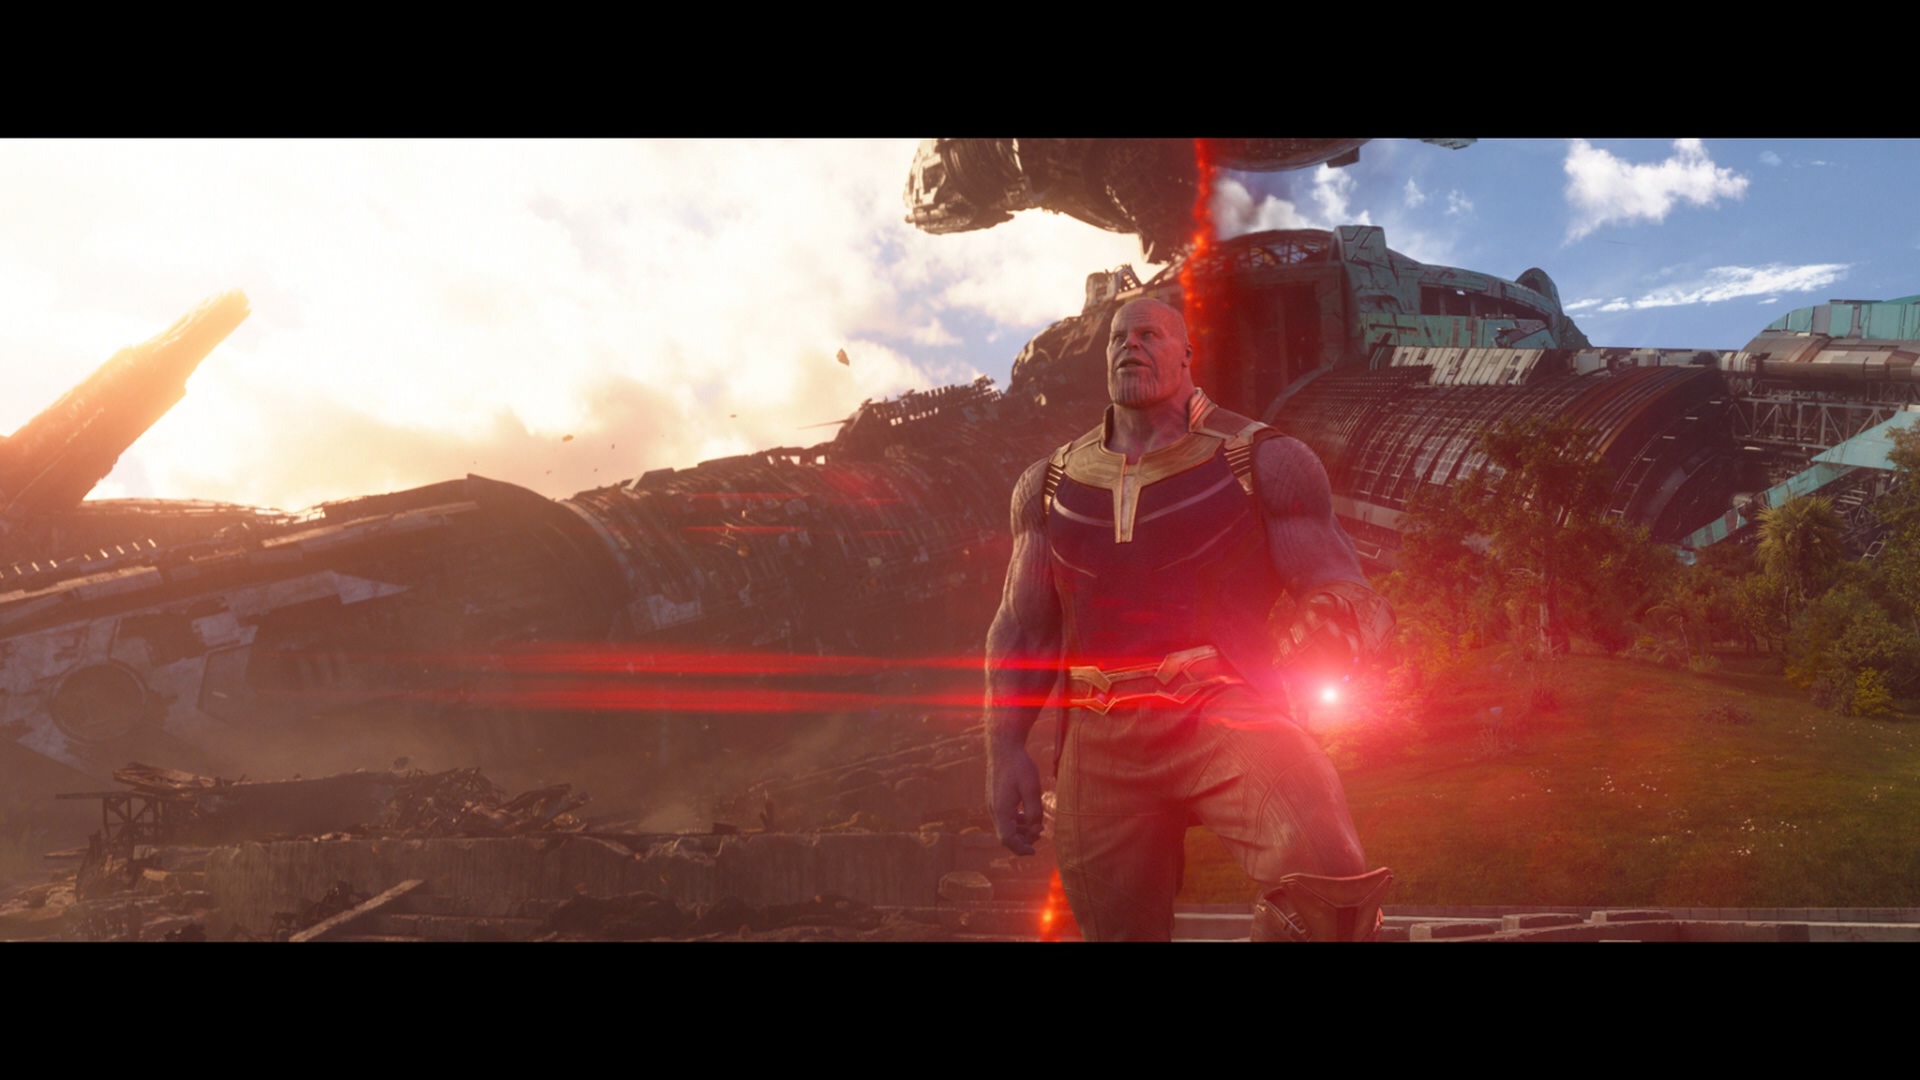 [复仇者联盟3].Avengers.Infinity.War.2018.3D.BRA.BluRay.1080p.AVC.DTS-HD.MA.7.1-Highvoltage    46.3G-18.jpg